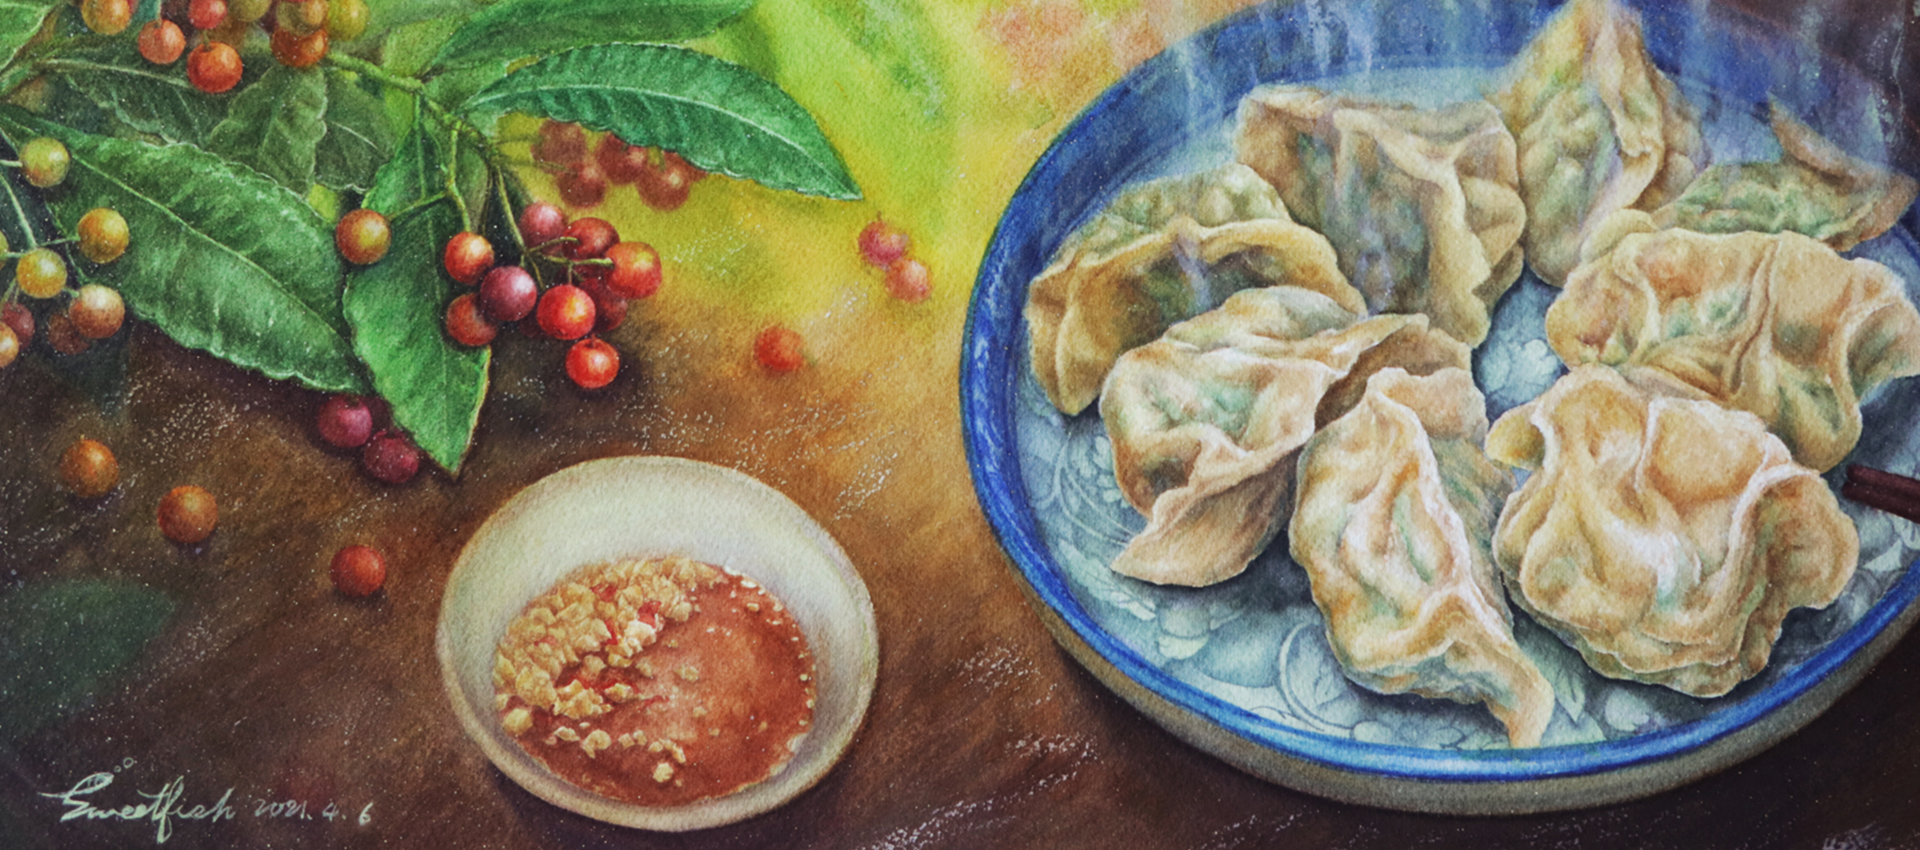 boiled-dumplings-and-ardisia-crispa-food-watercolor-painting-by-sweetfish-food-art